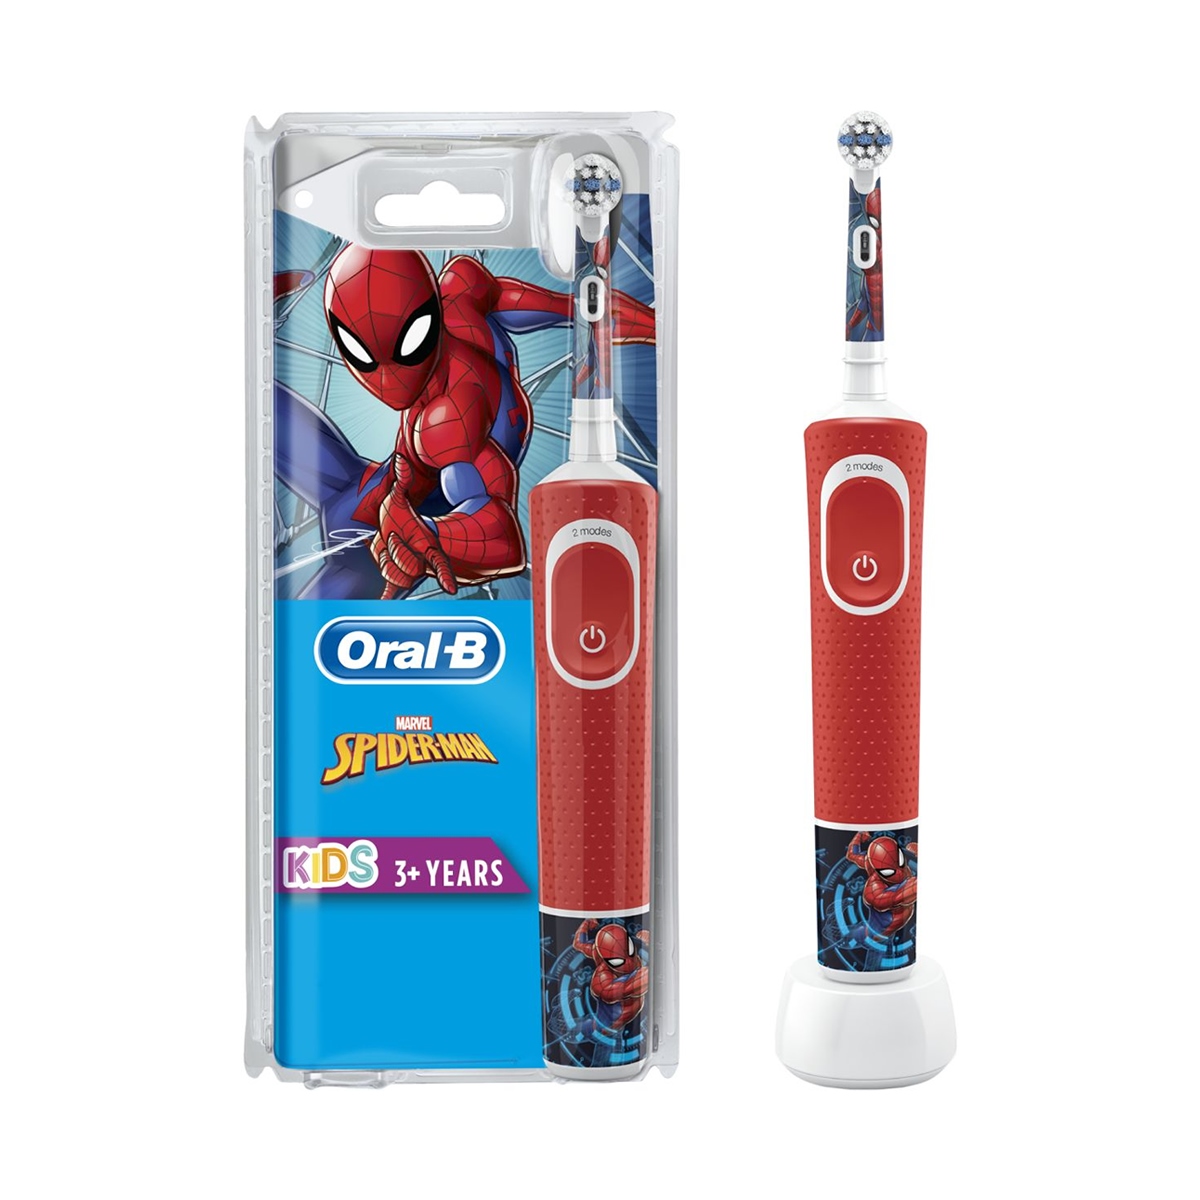 Braun Oral-B Kids Spiderman